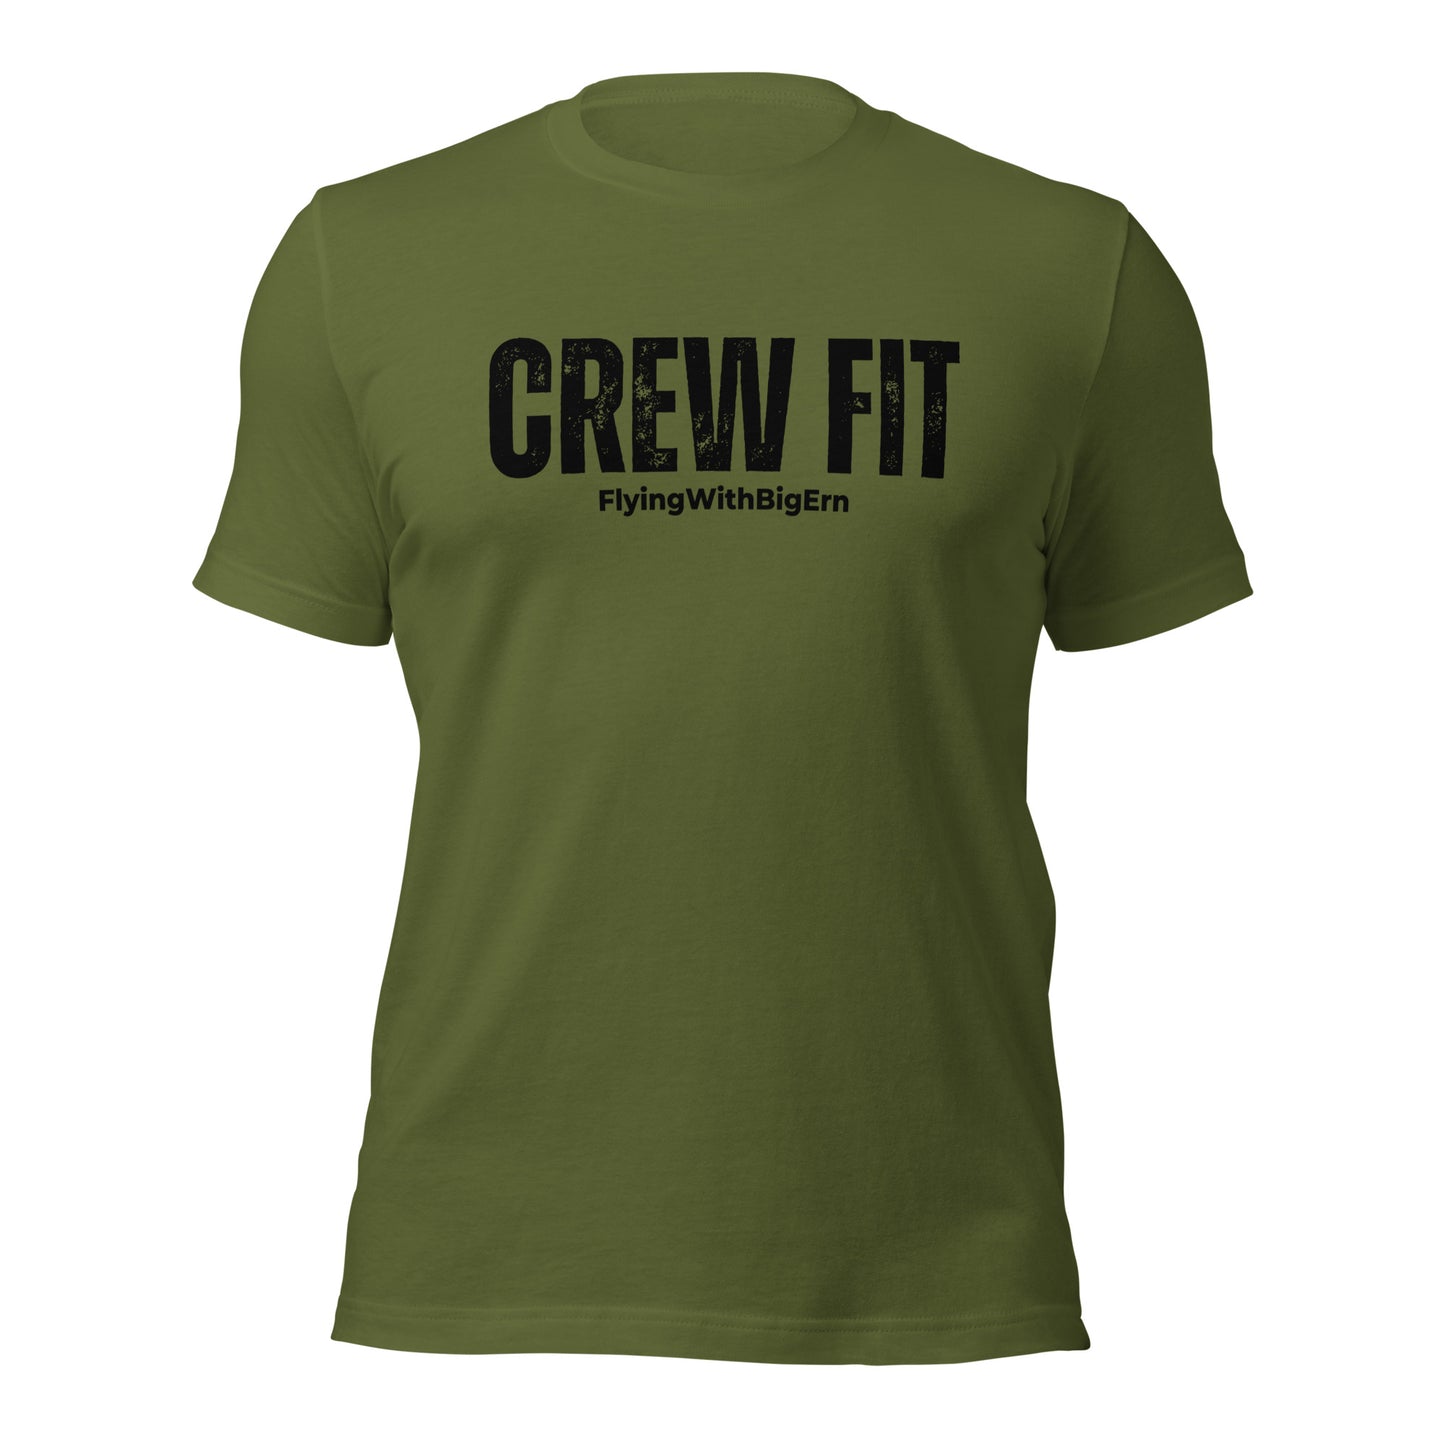 CrewFit t-shirt